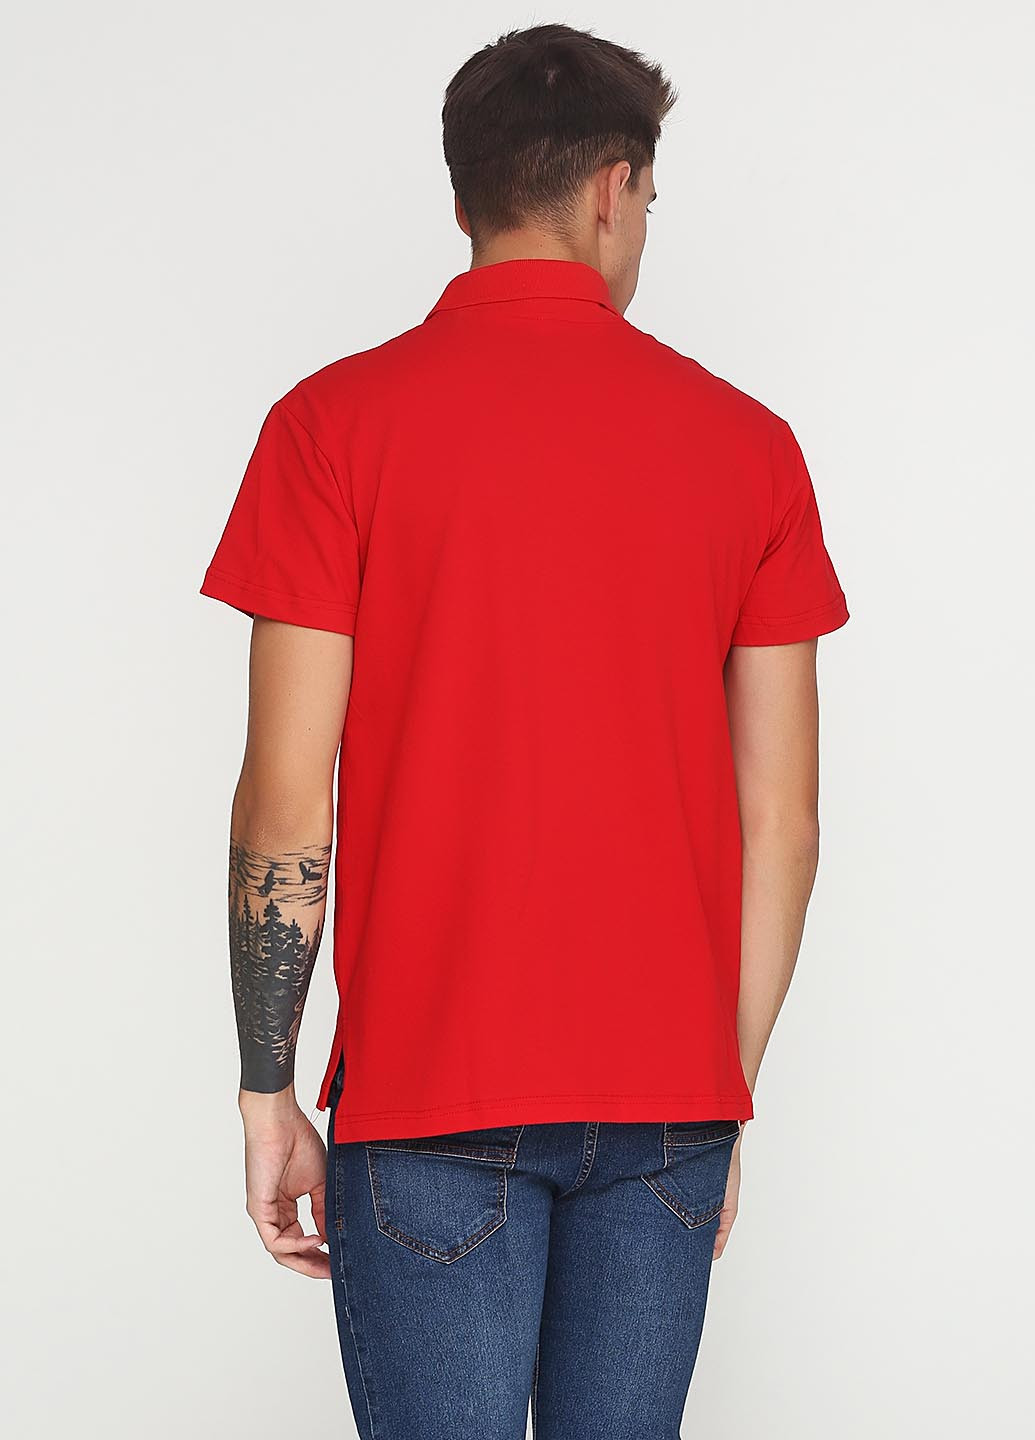 Красная футболка-поло для мужчин Tryapos с рисунком